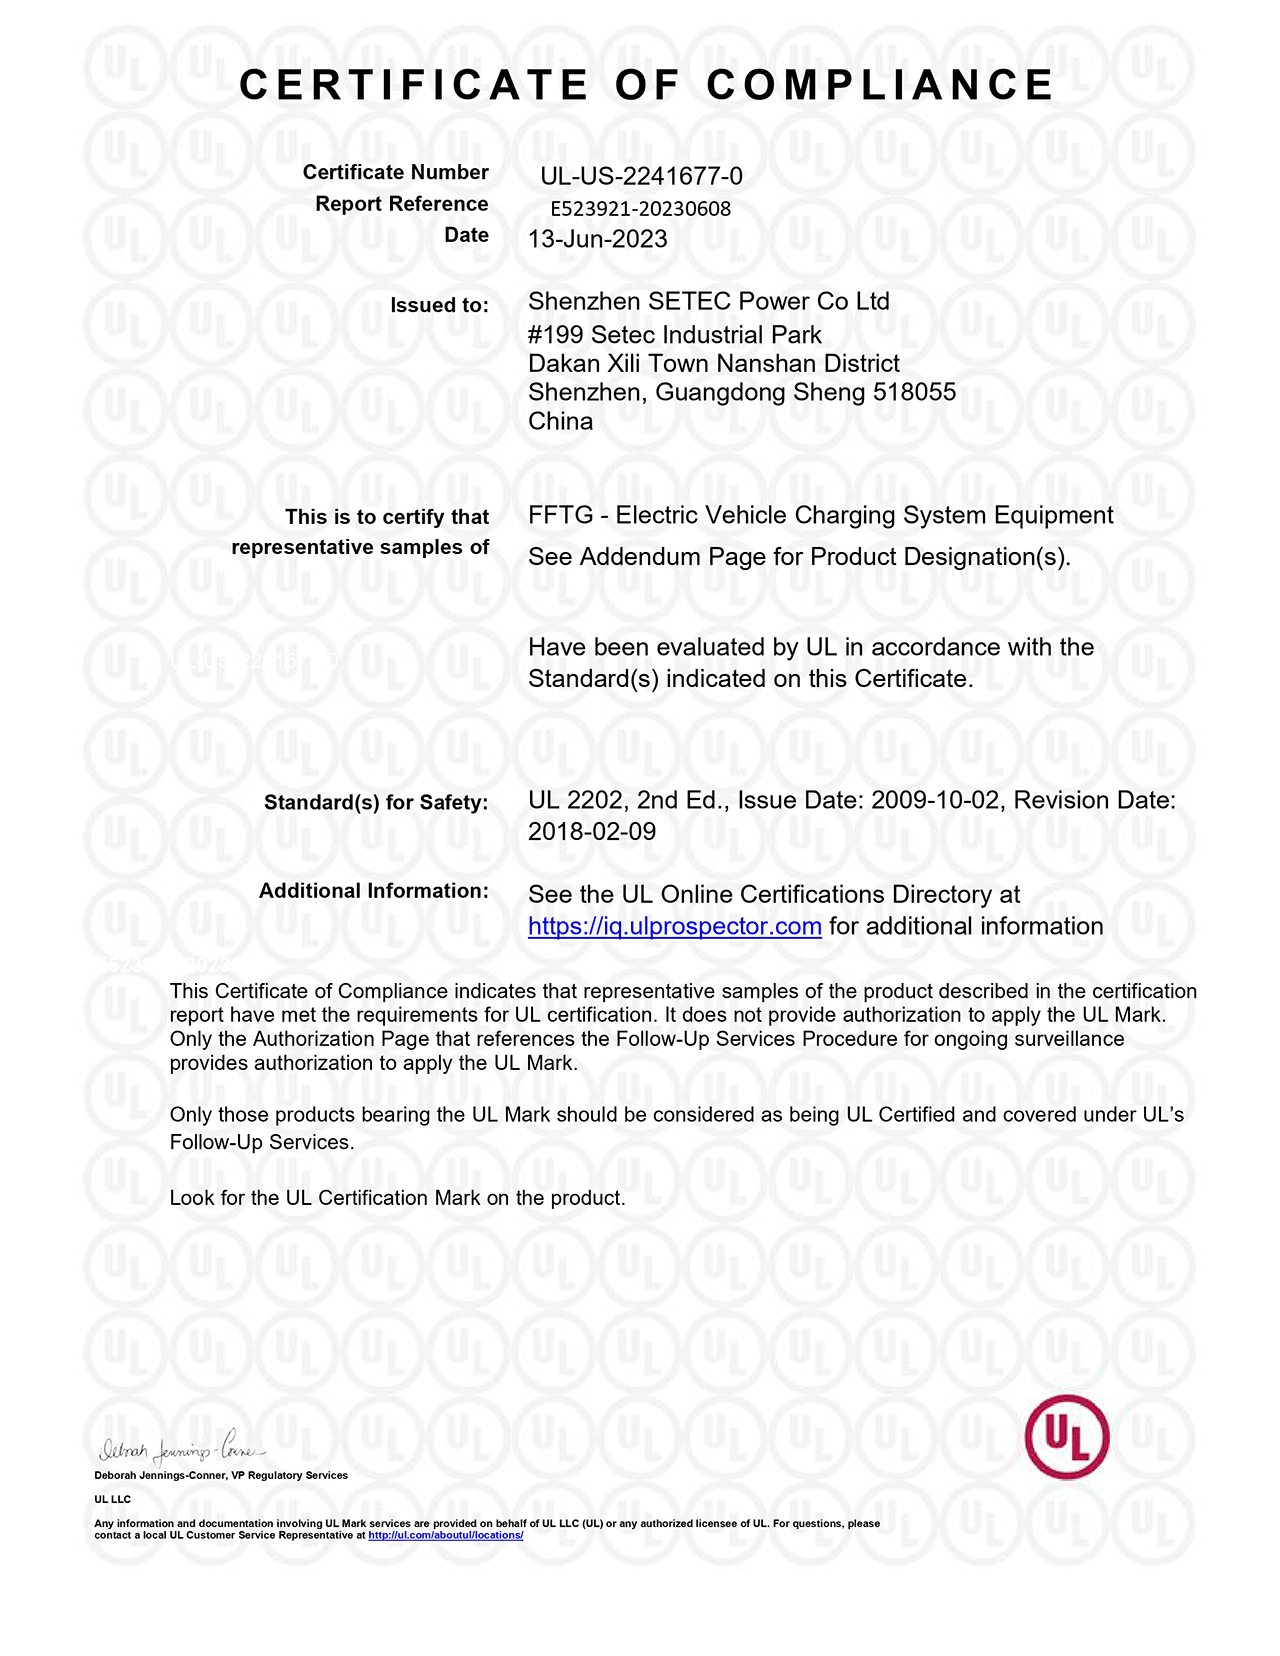 SETEC POWER UL Certificate-1